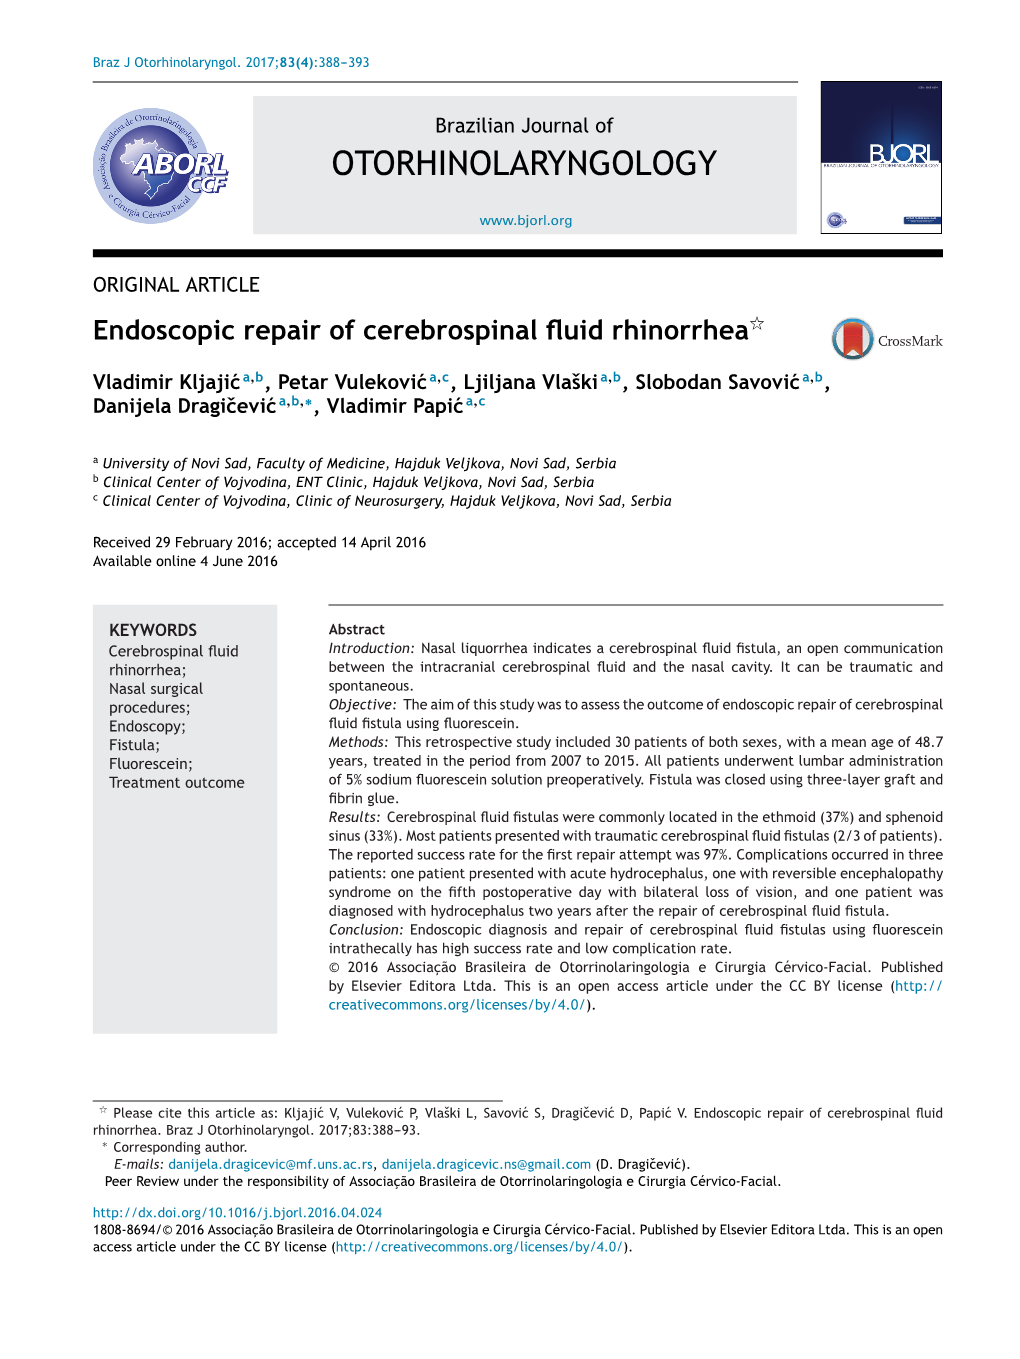 Endoscopic Repair of Cerebrospinal Fluid Rhinorrhea